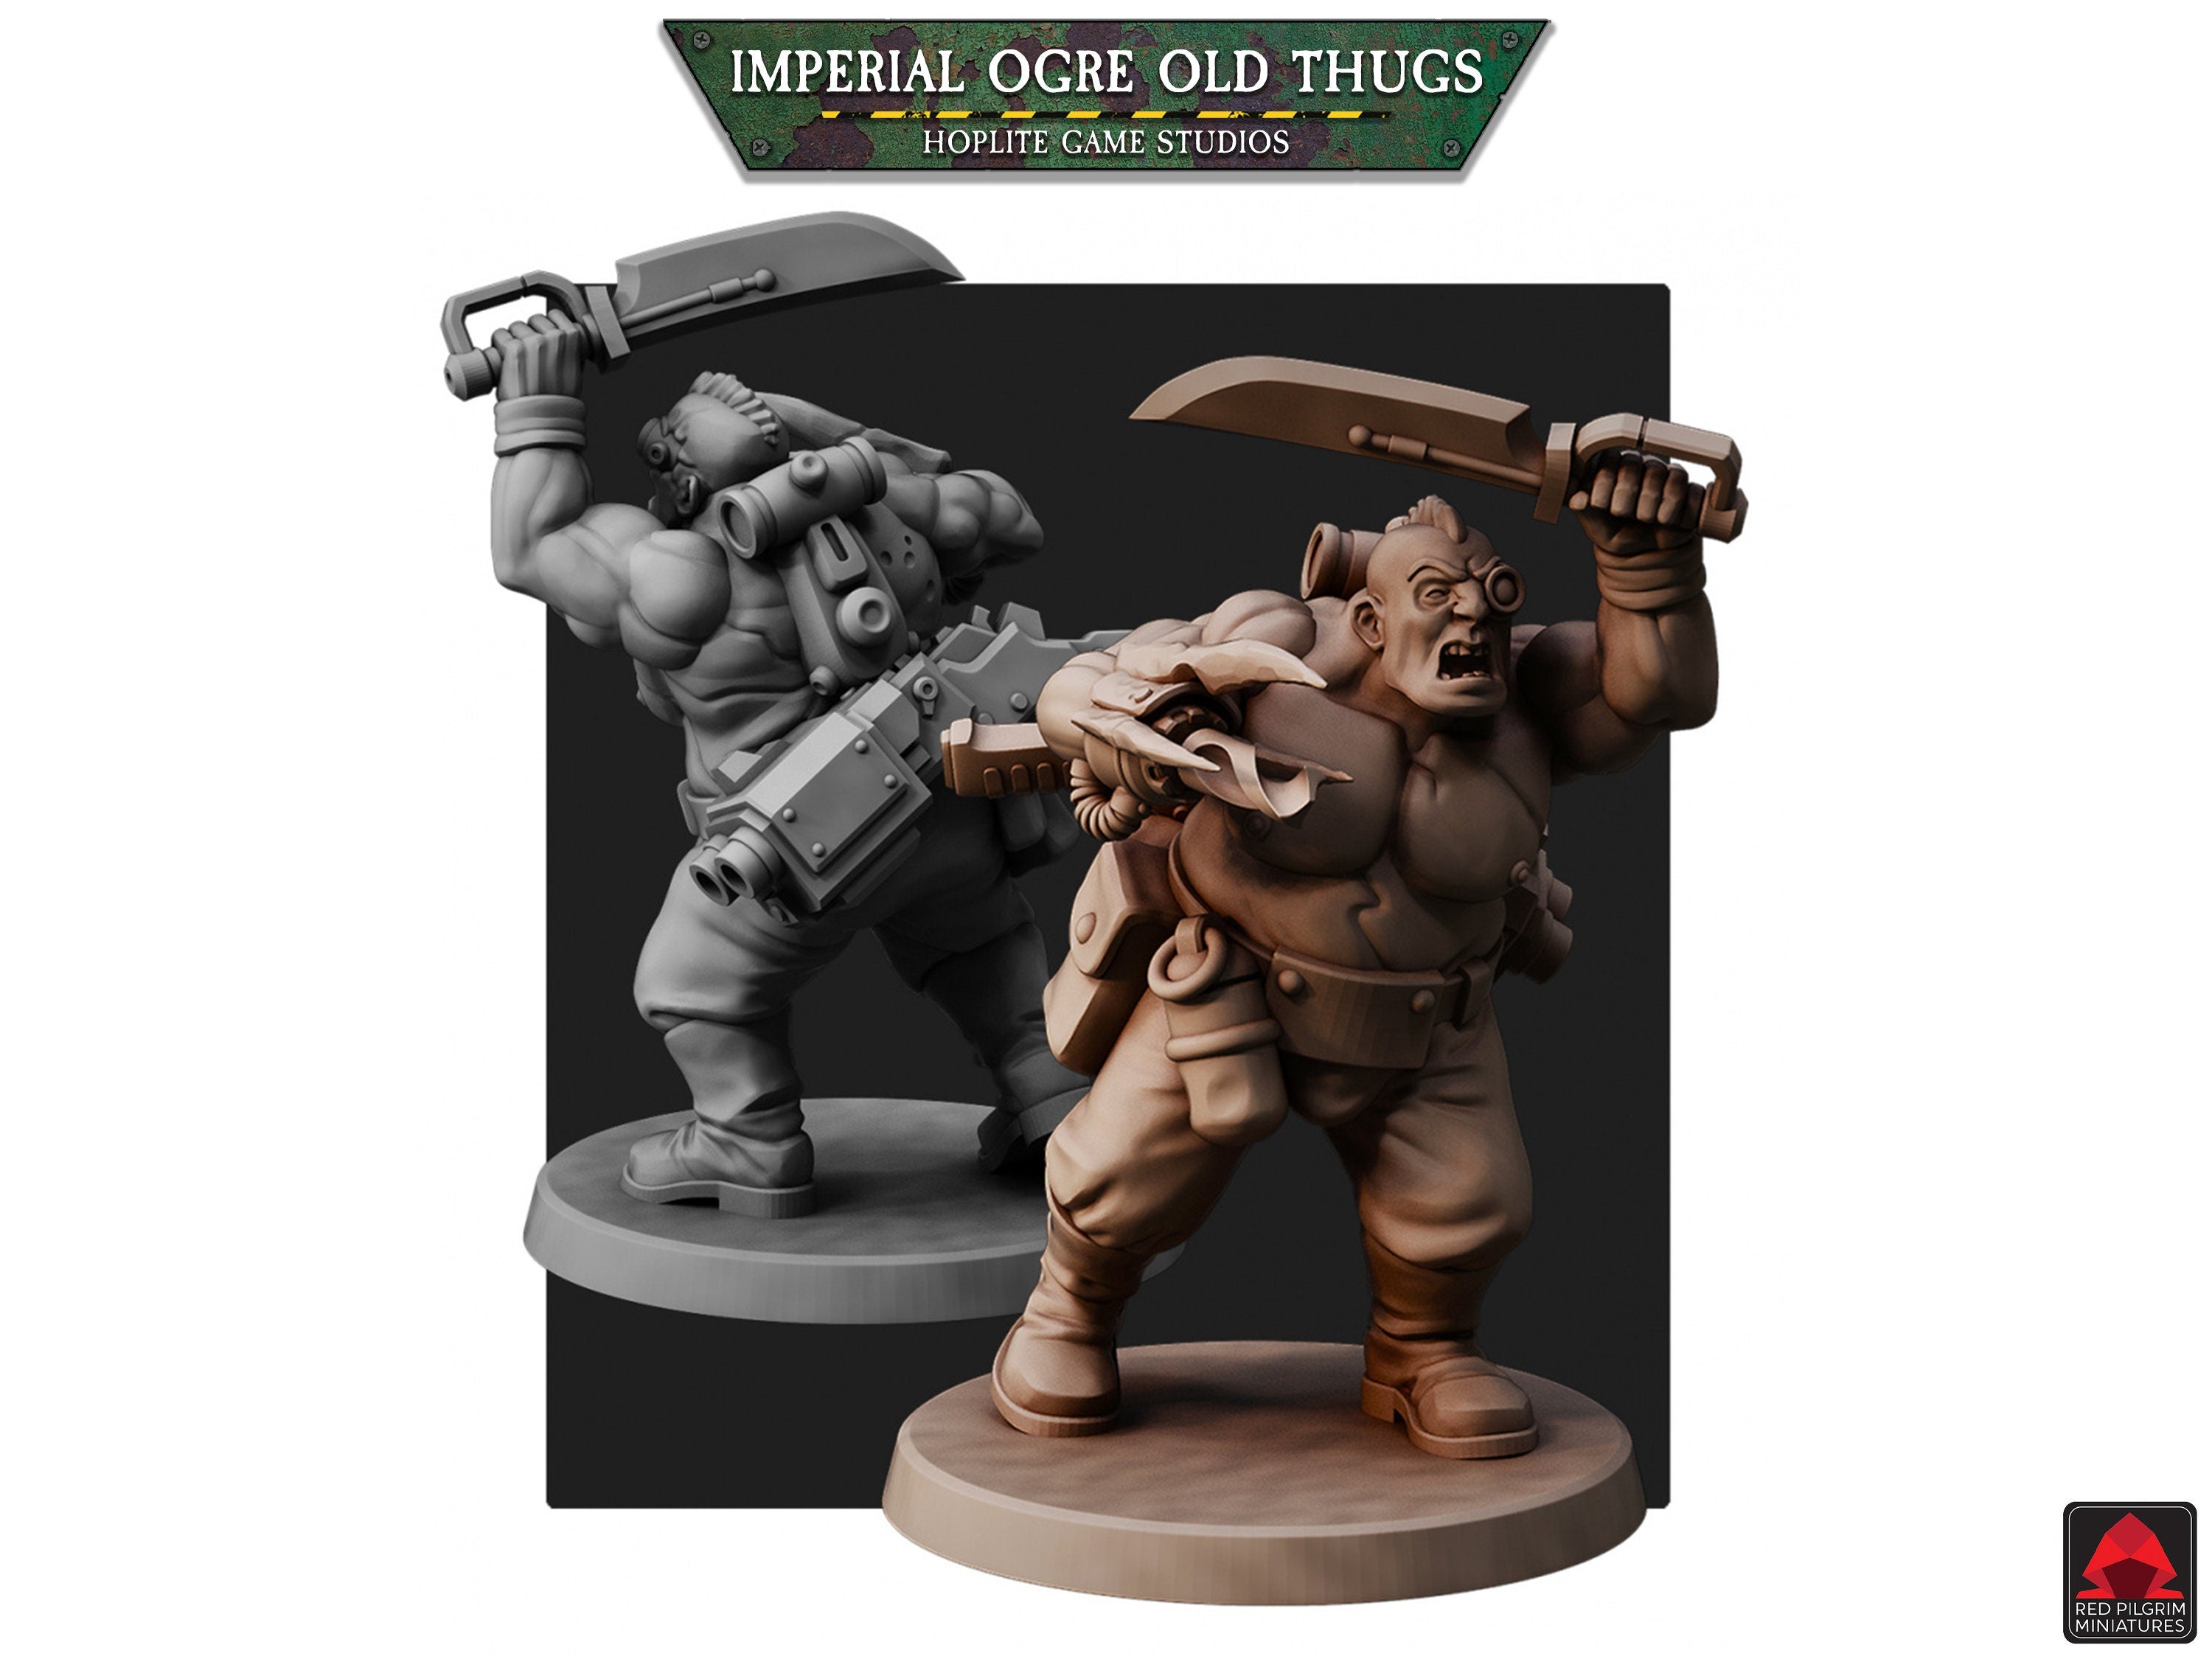 Imperial Ogre Old Thugs | Red Pilgrim Miniatures | 32mm